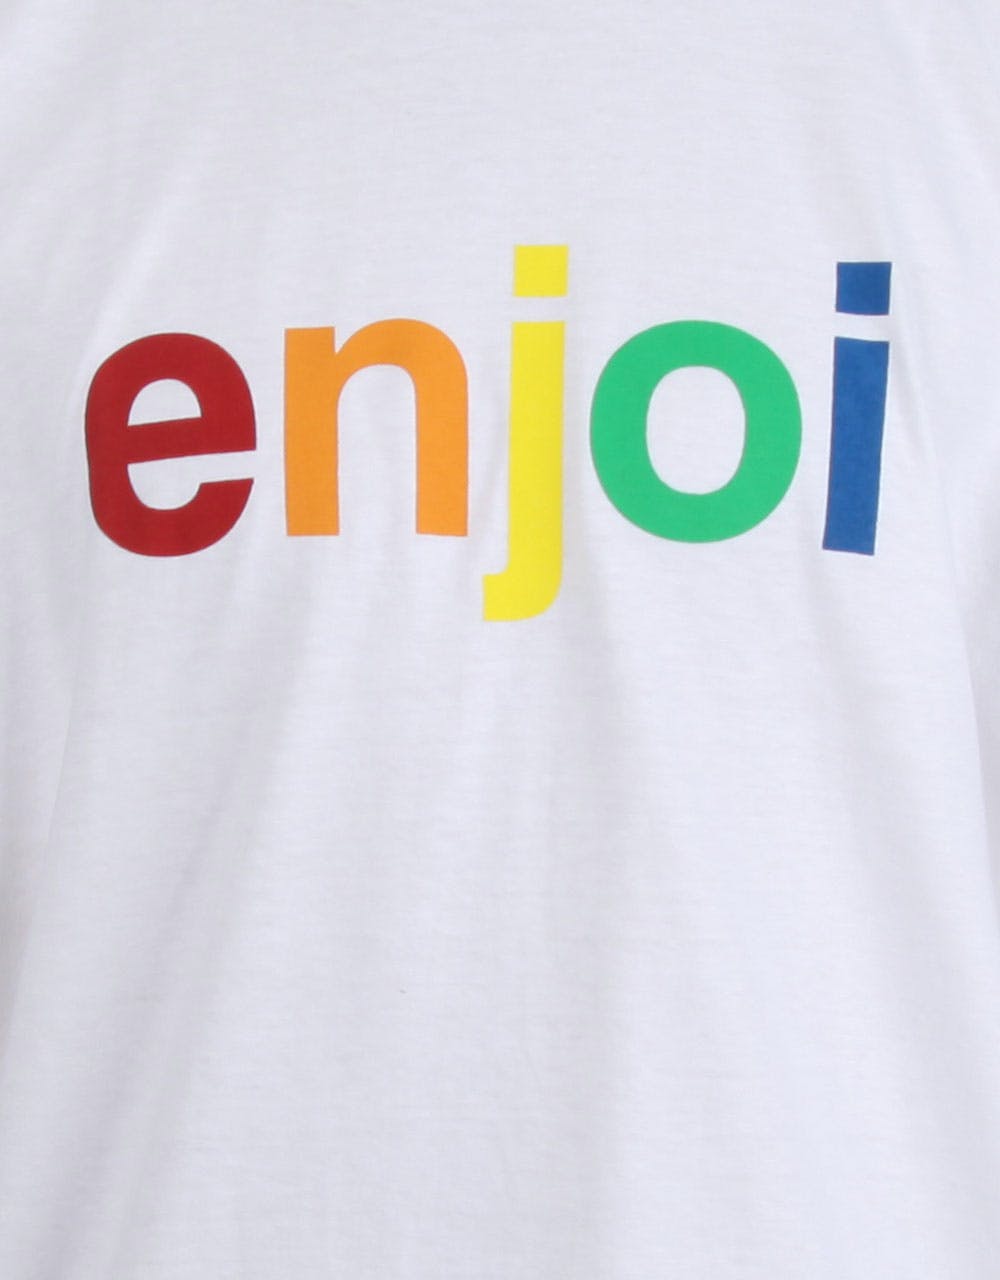 Enjoi Spectrum T-Shirt